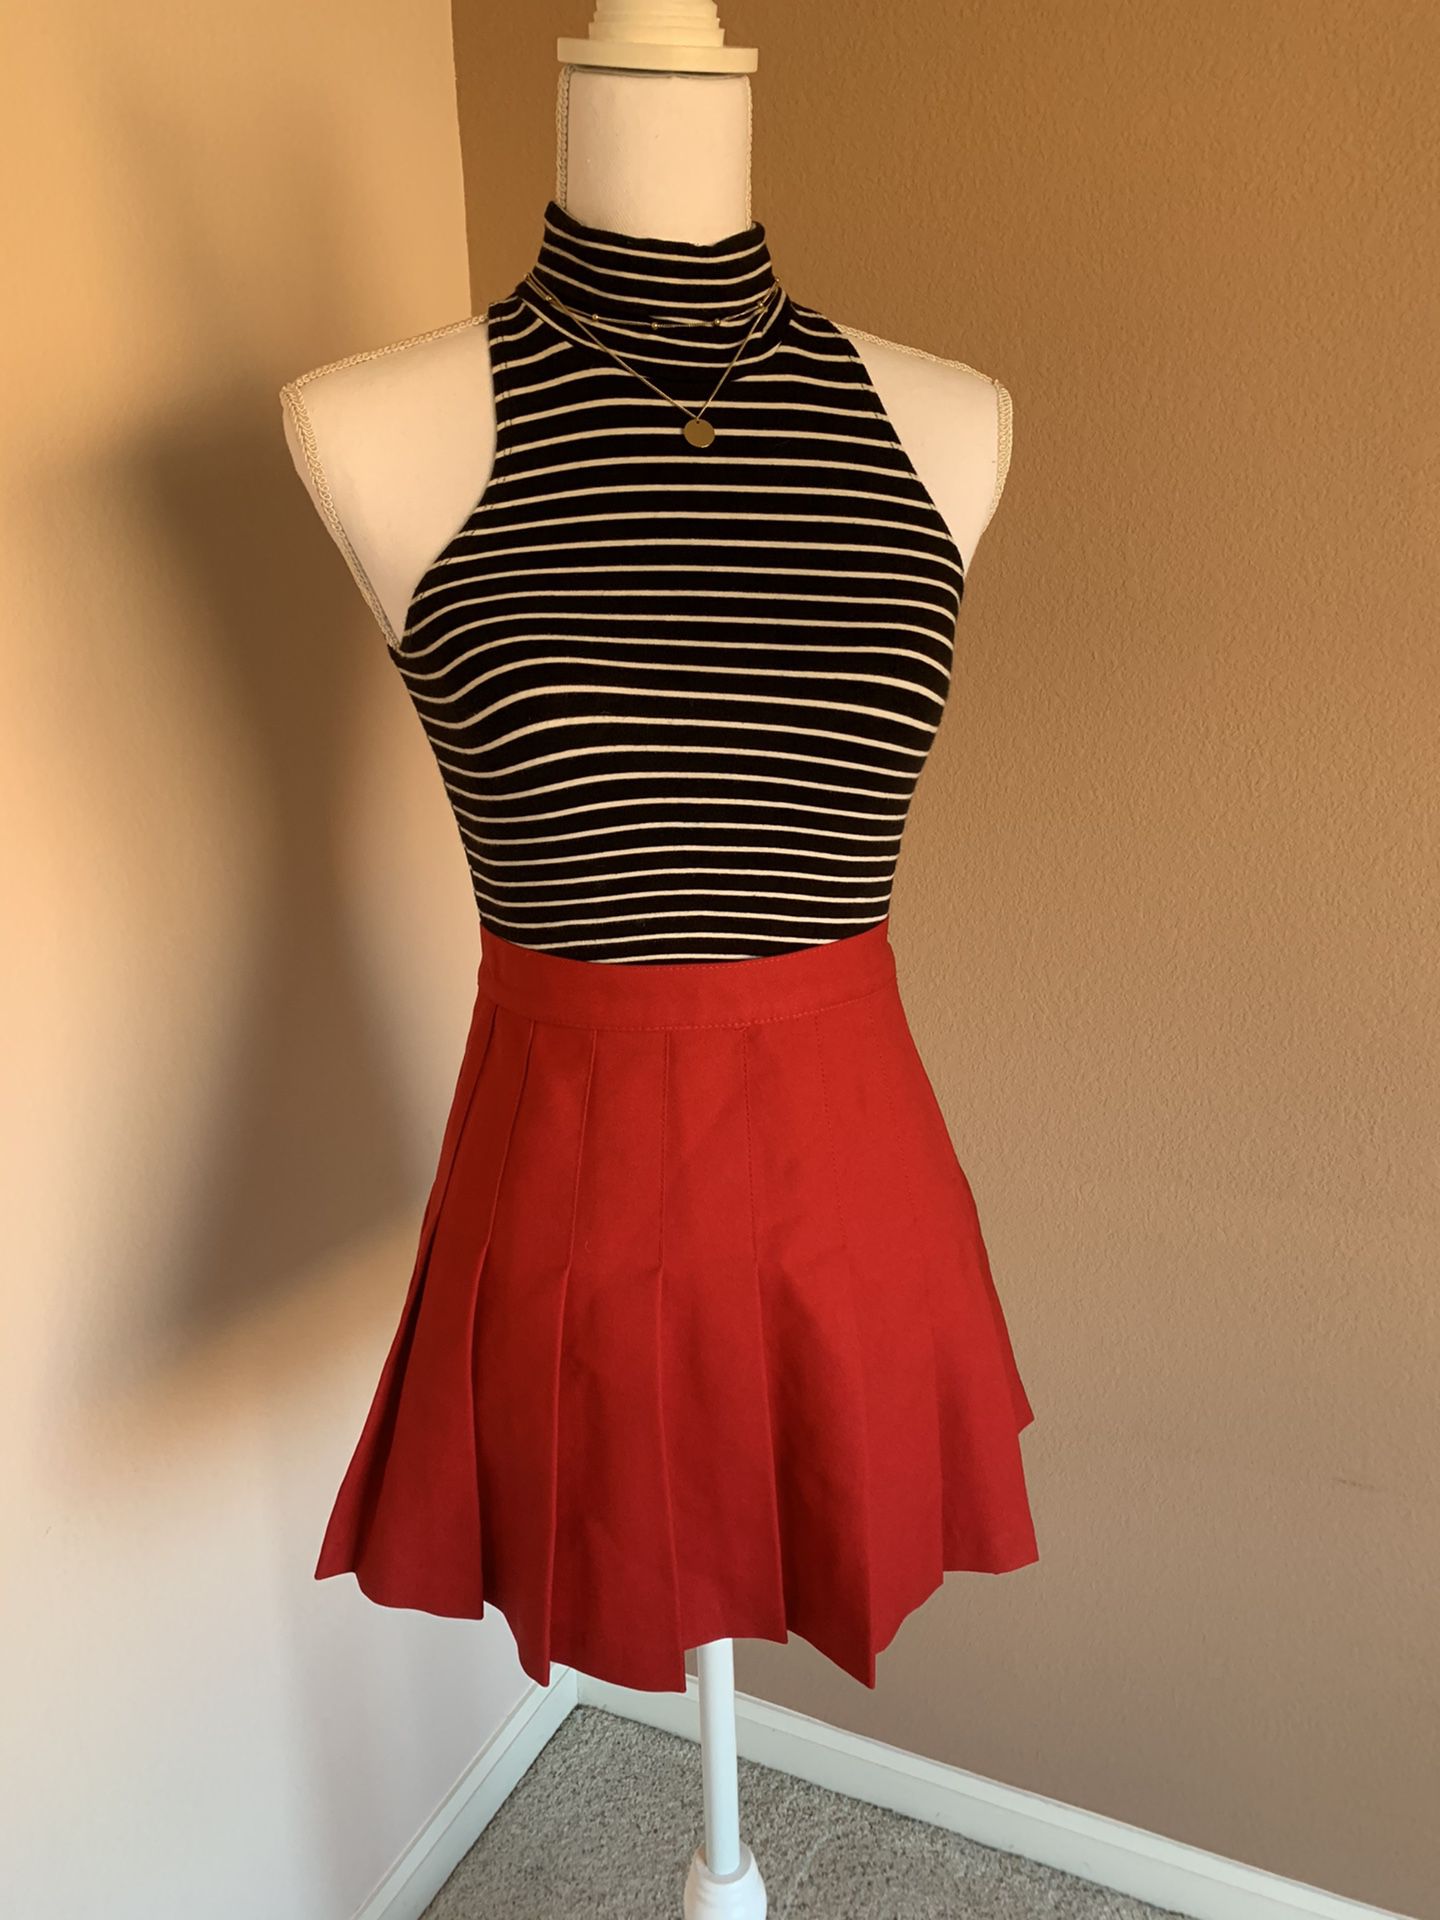 American Apparel red mini skirt